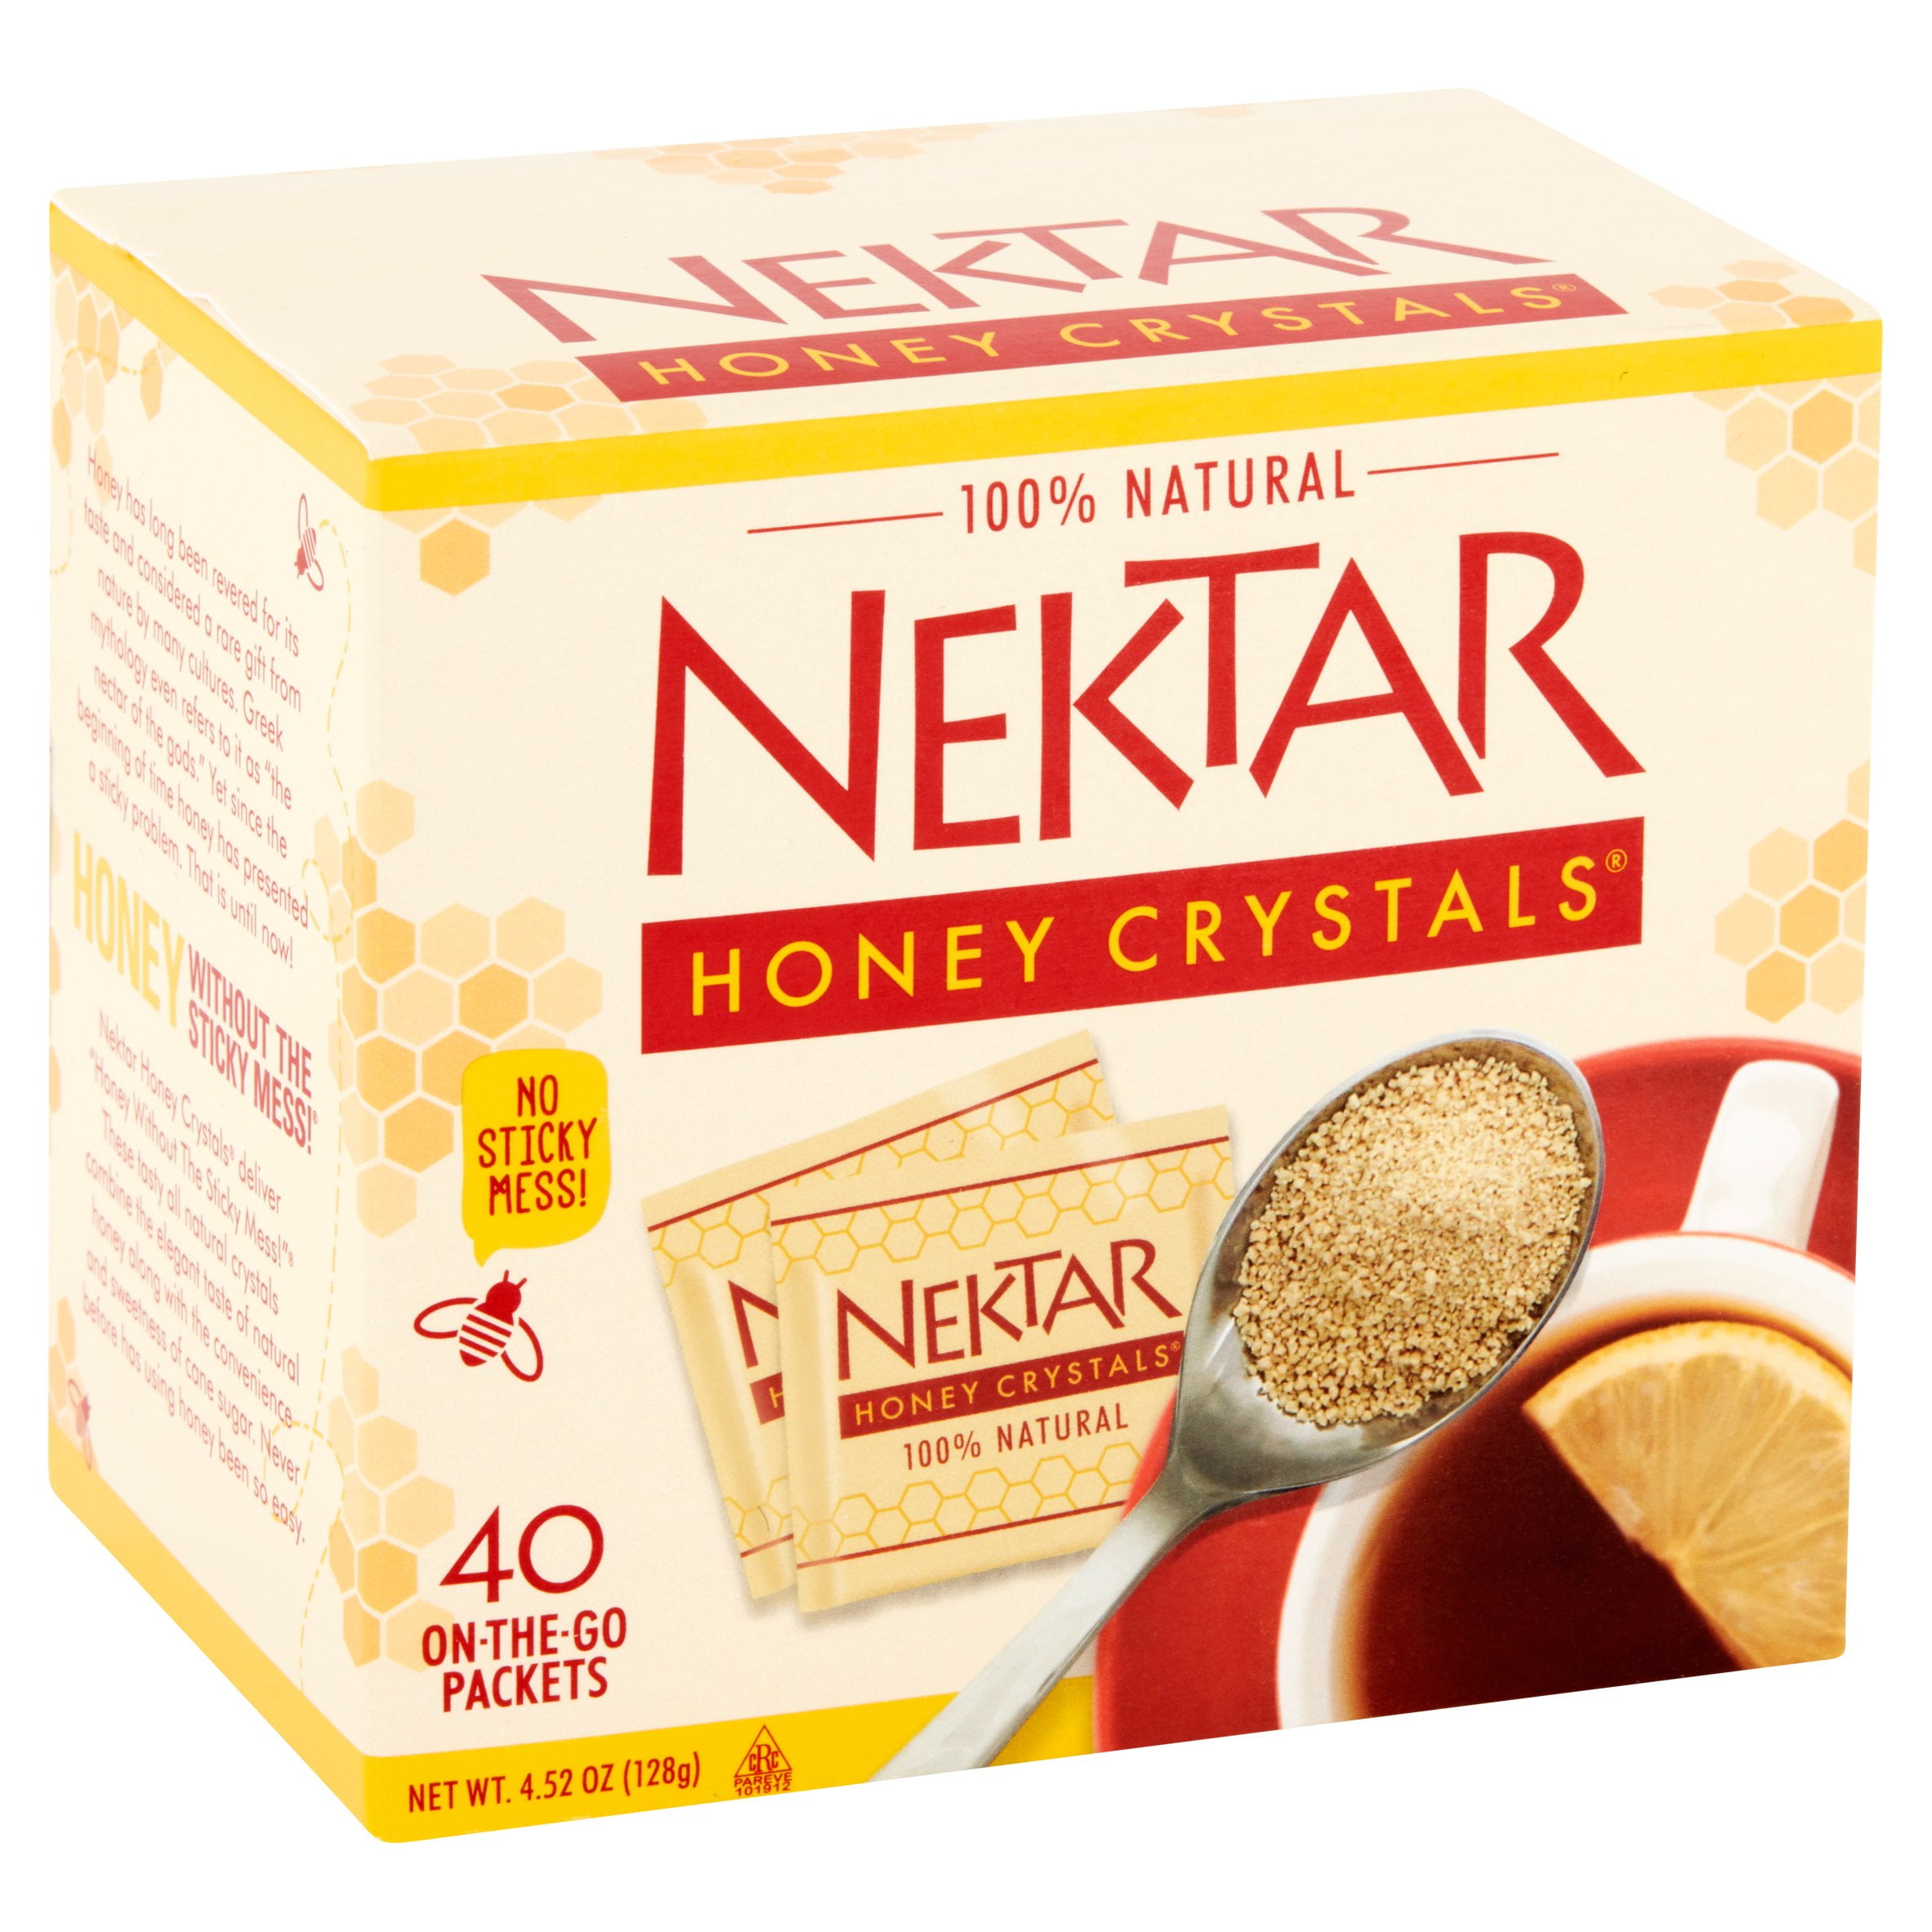 Nektar Honey Crystals, 40 count, 4.52 oz